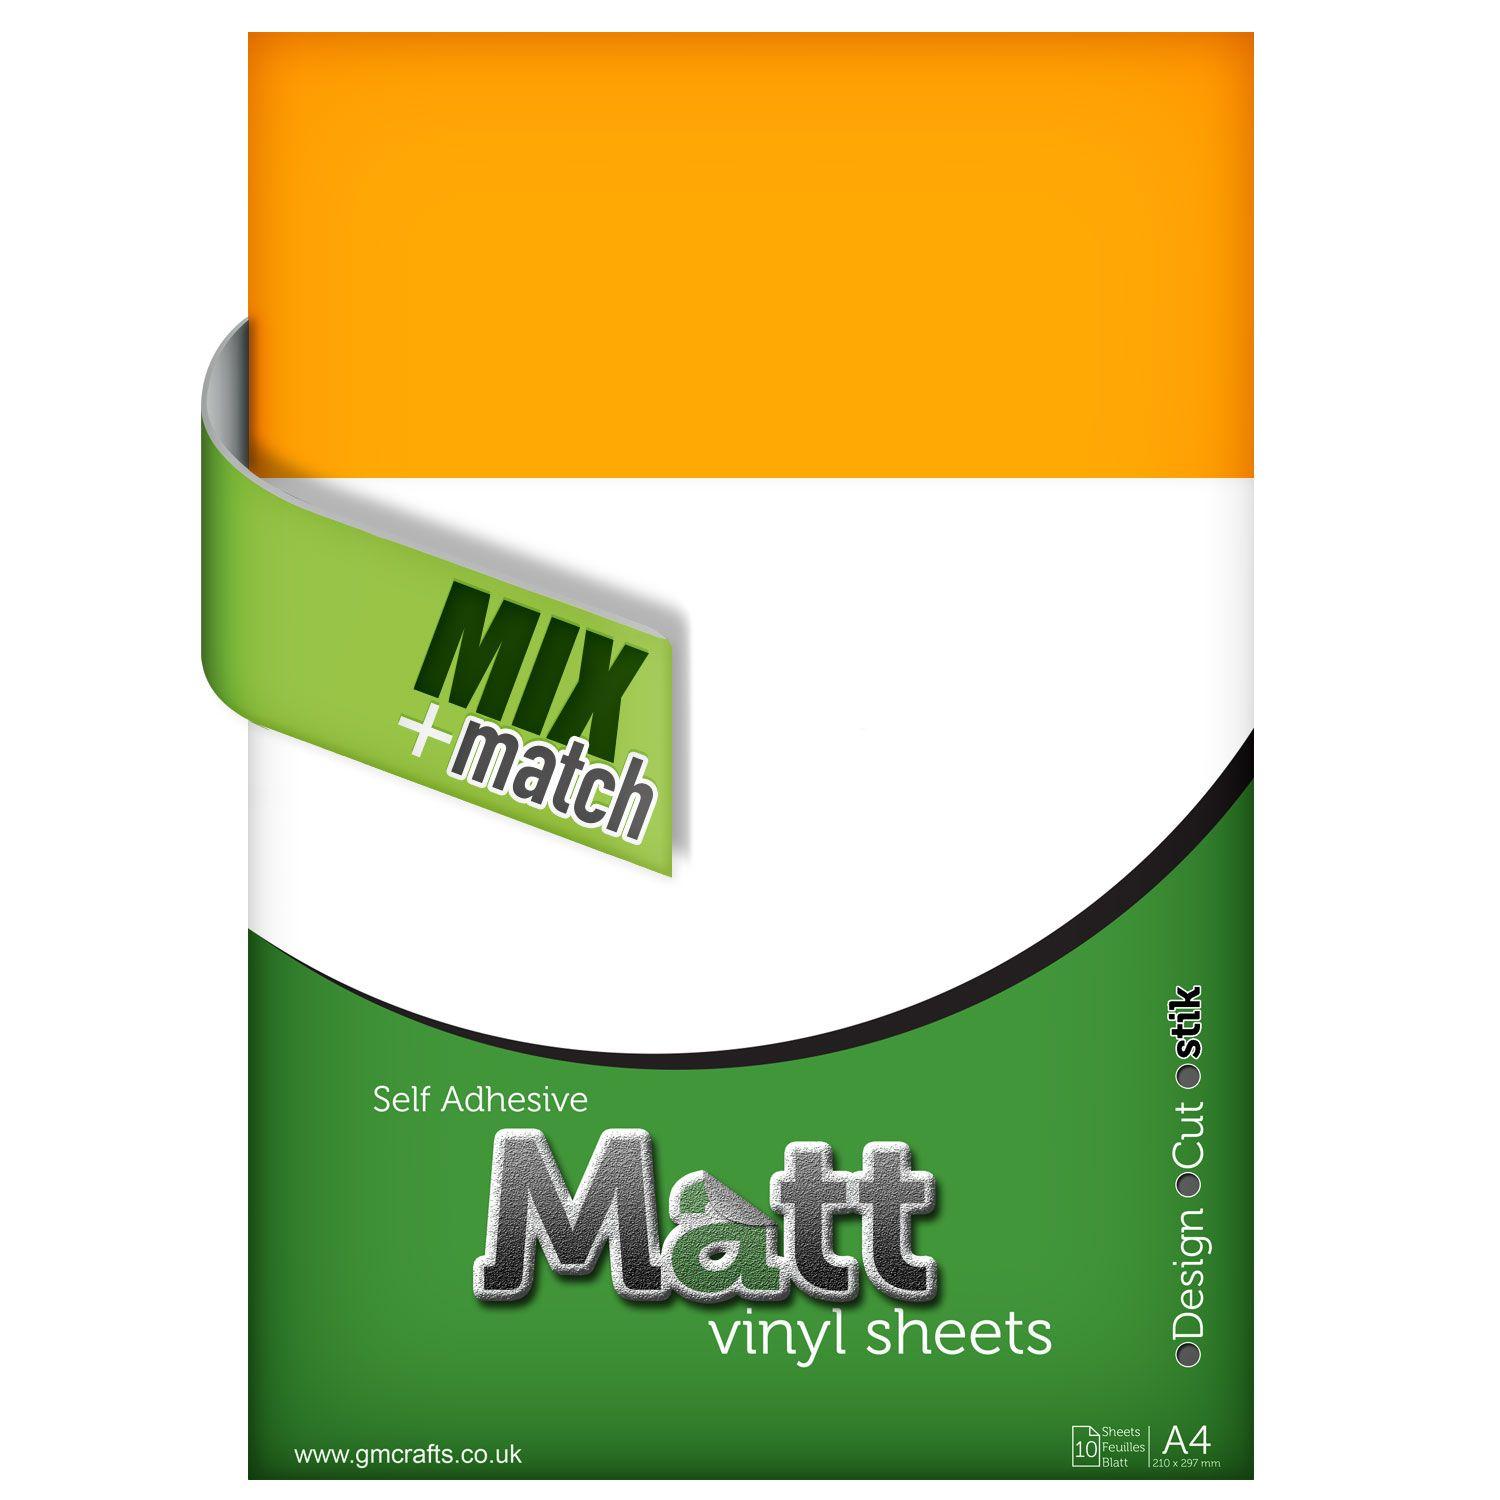 Yellow Sheets of Paper Logo - 10 x Self Adhesive A4 Golden Yellow Matt Vinyl Sheets - GM Crafts